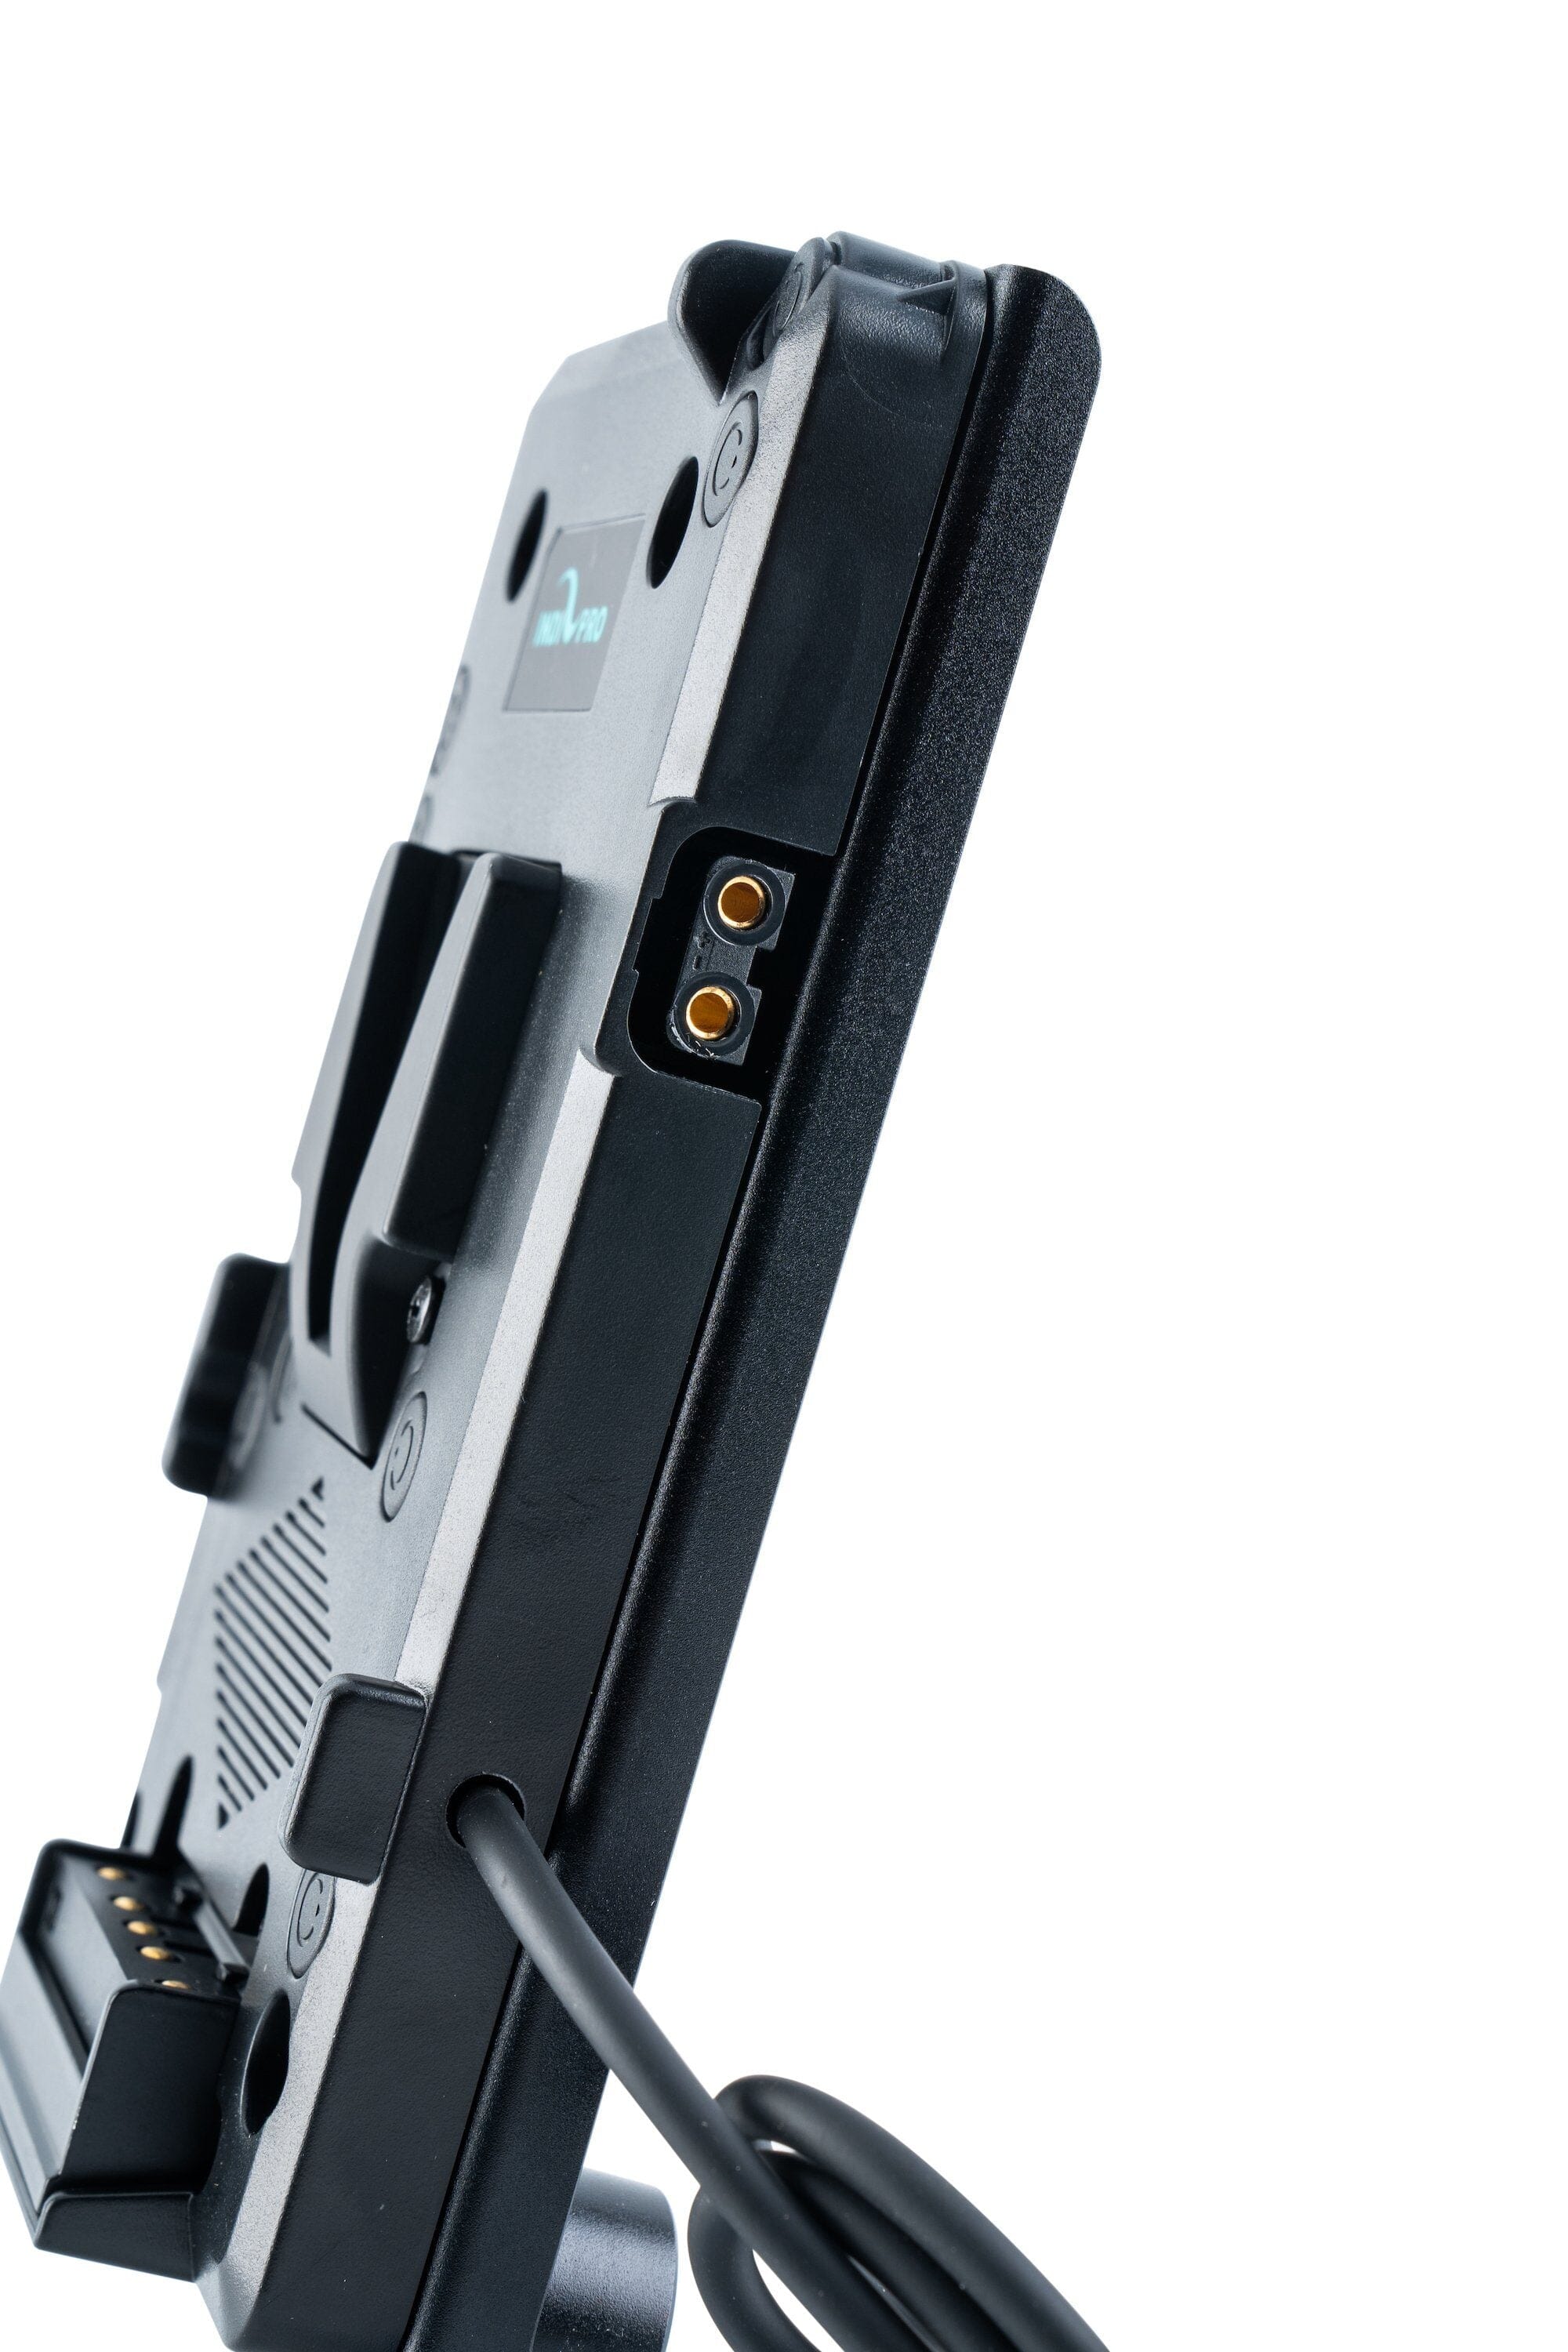 V-Mount Battery Adapter Plate for Sony PXW-FX9 XDCAM 6K Full-Frame Camera PXW-FX9 Indipro 